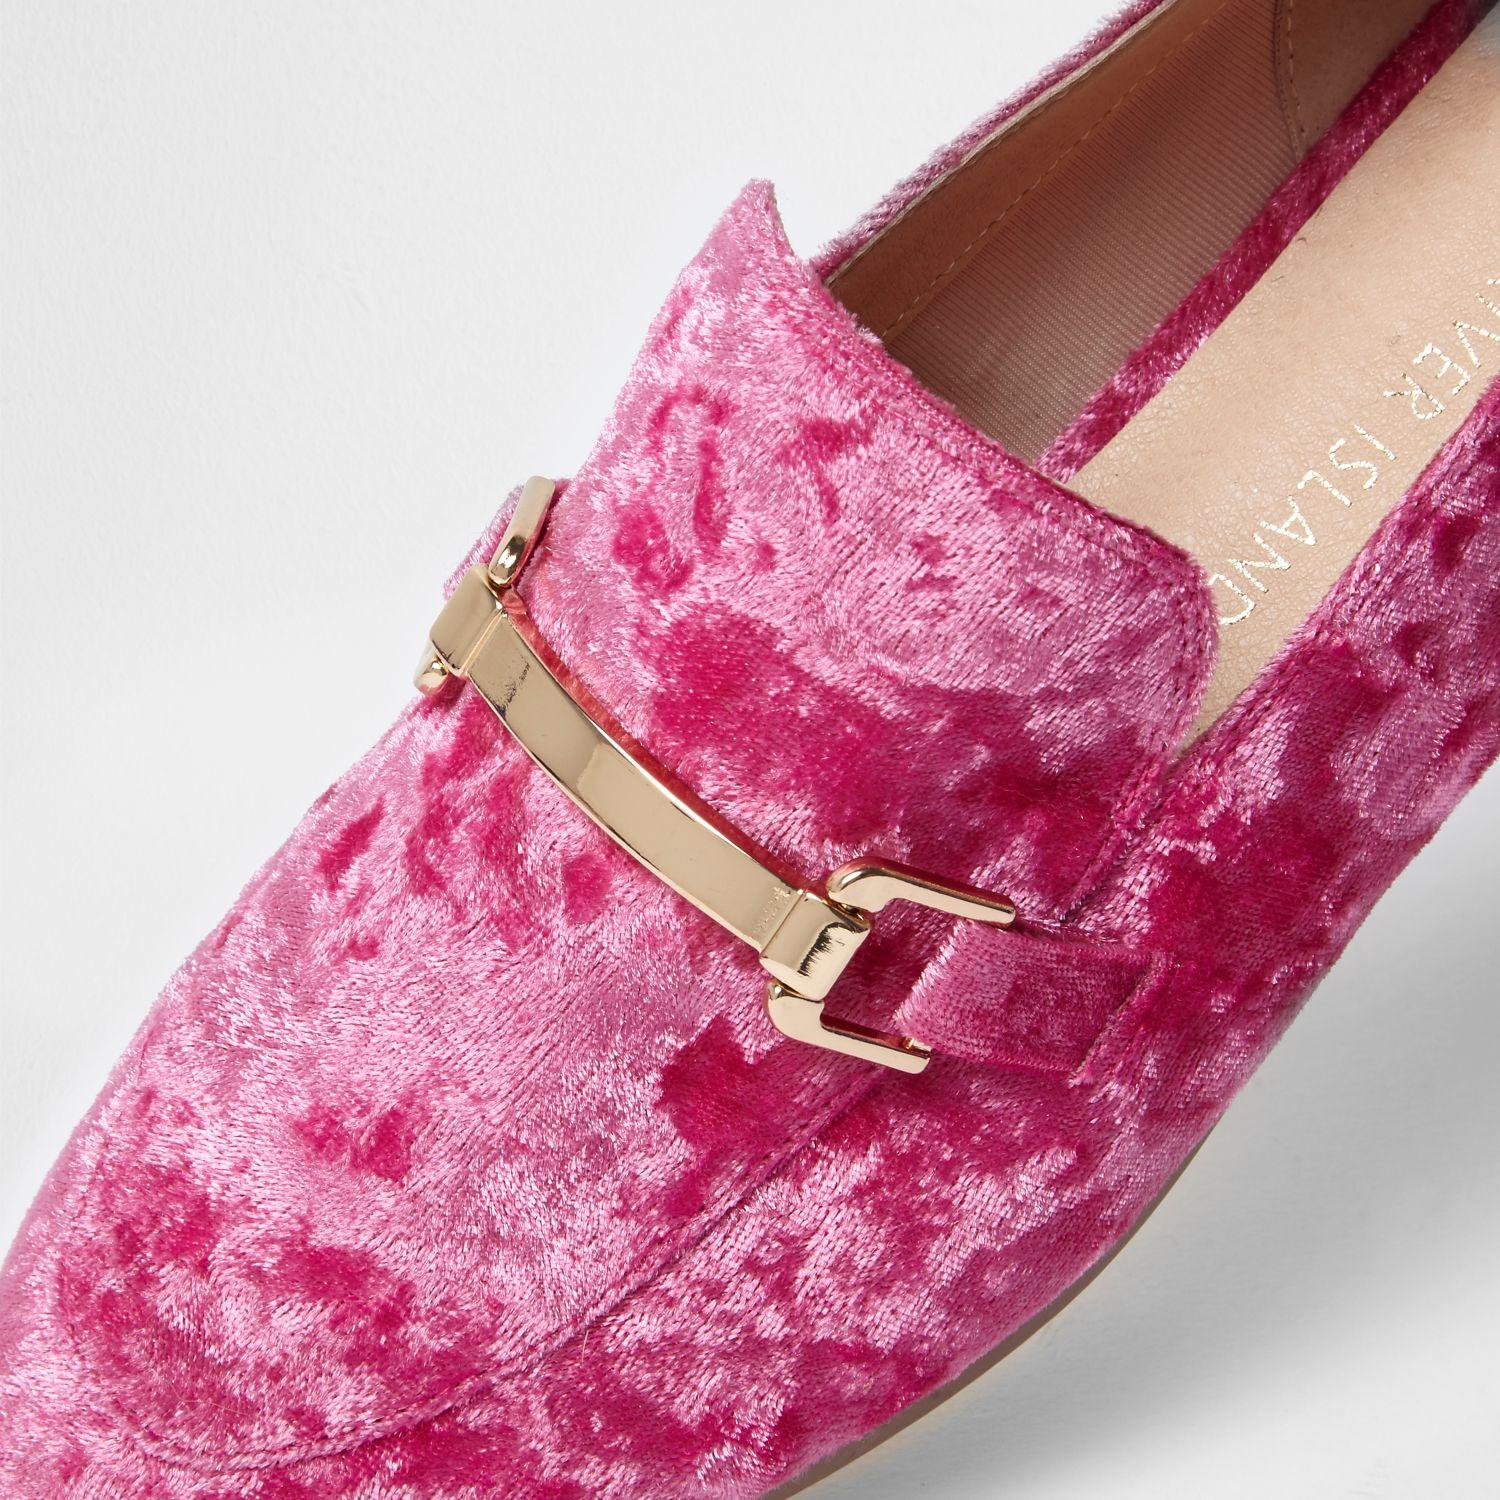 Dreamy Flat Loafers - Luxury Pink